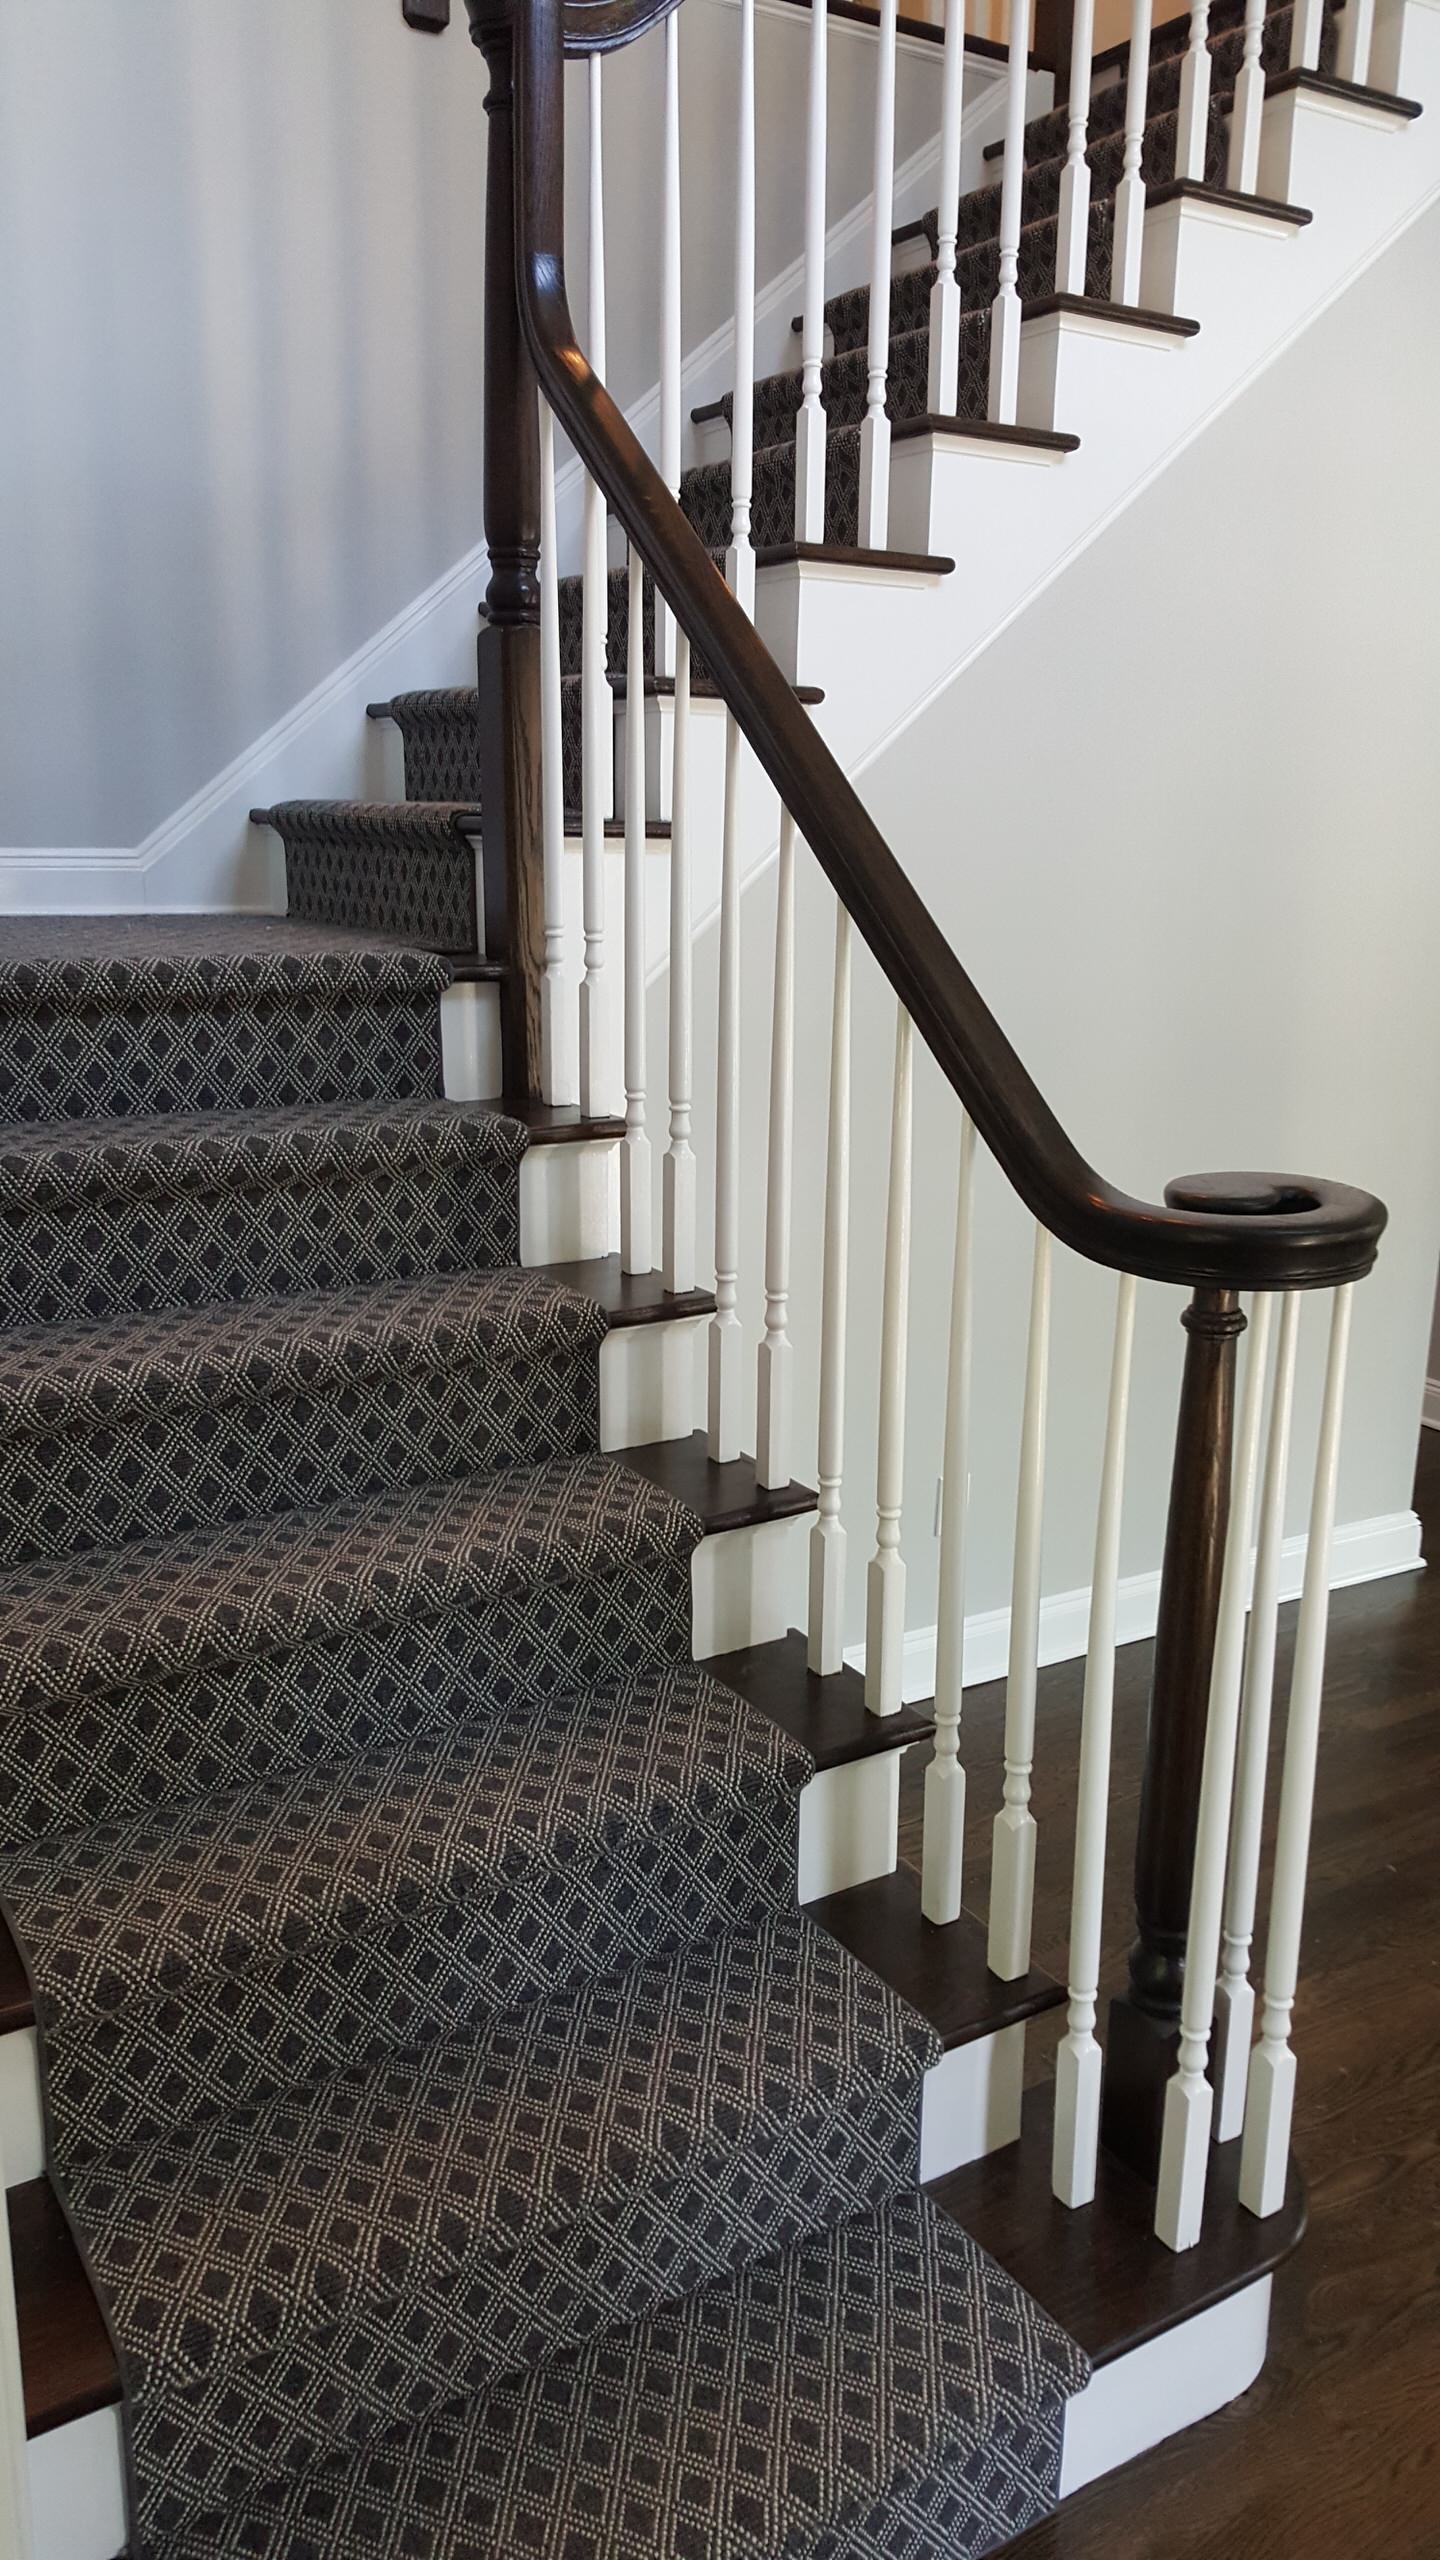 Carpet Stairs Wood Floor Transition - Photos & Ideas | Houzz